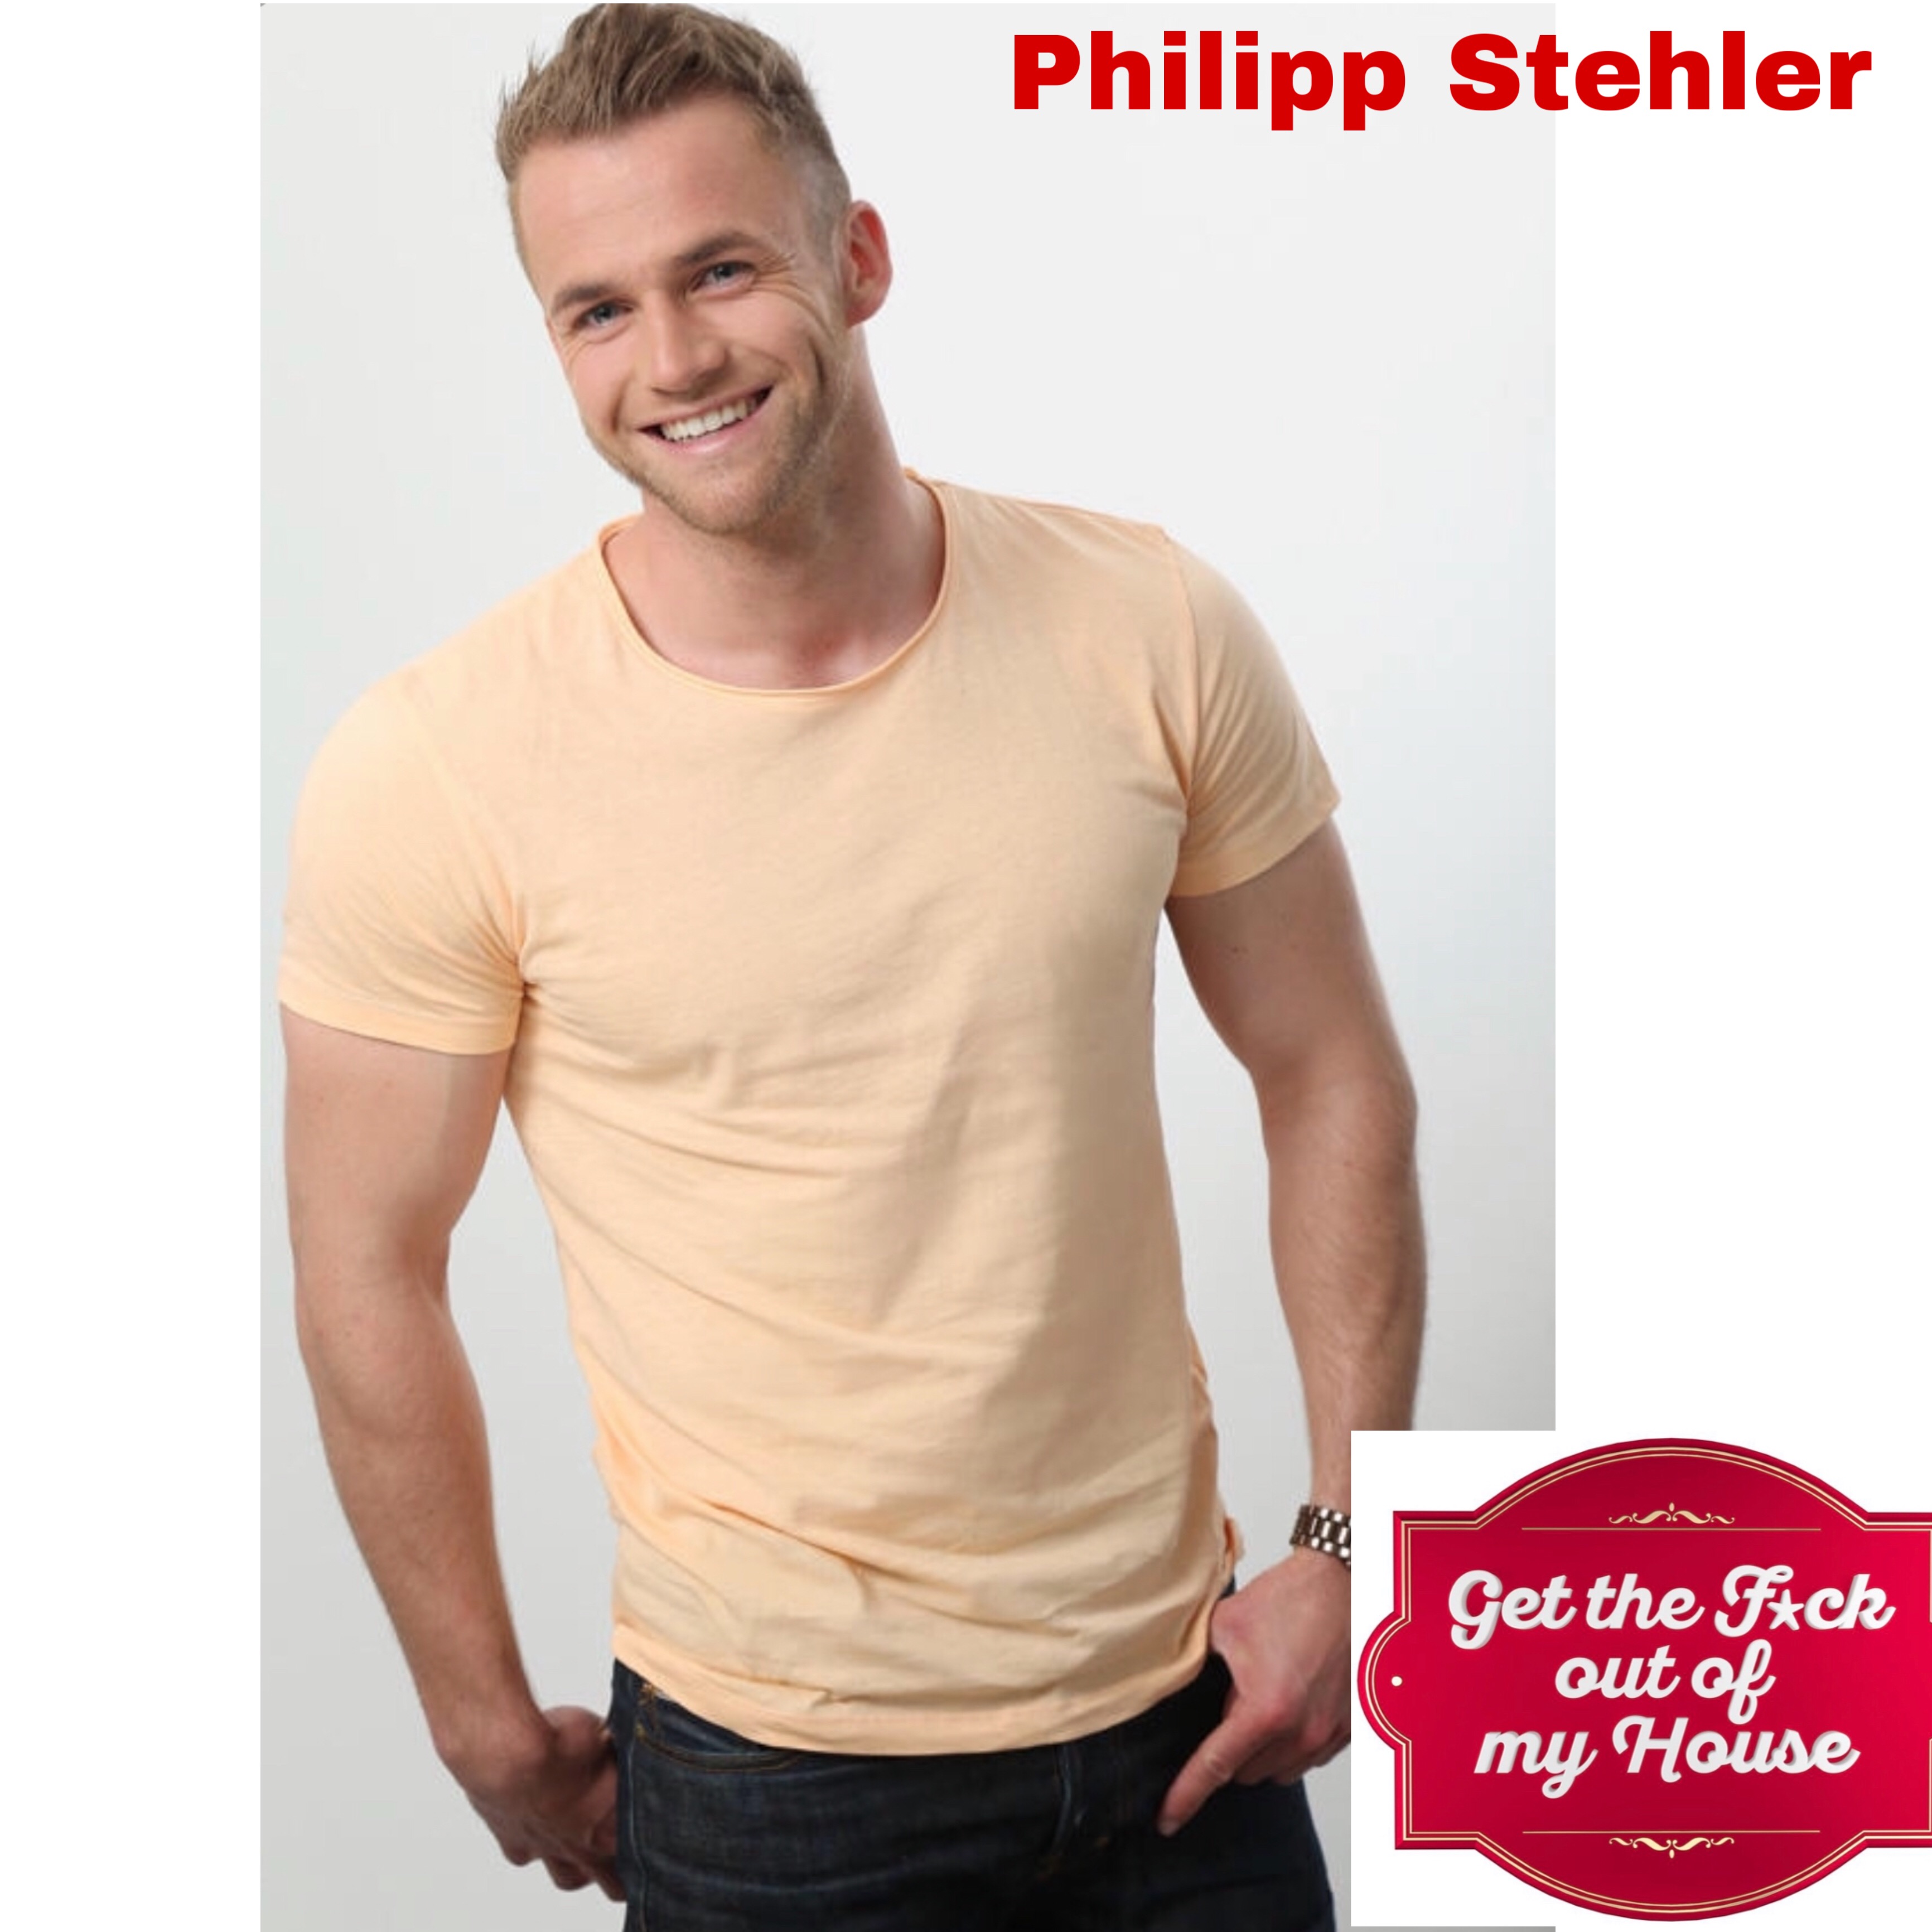 04. Philipp Stehler